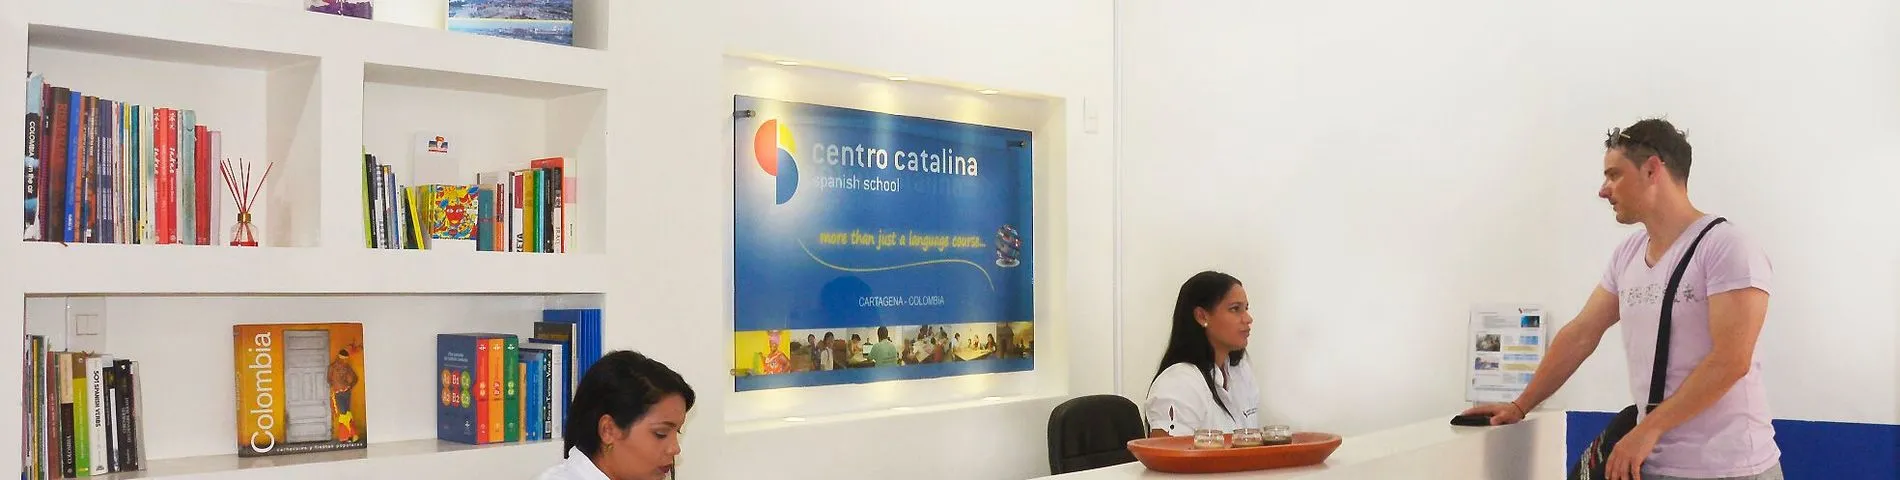 Centro Catalina picture 1